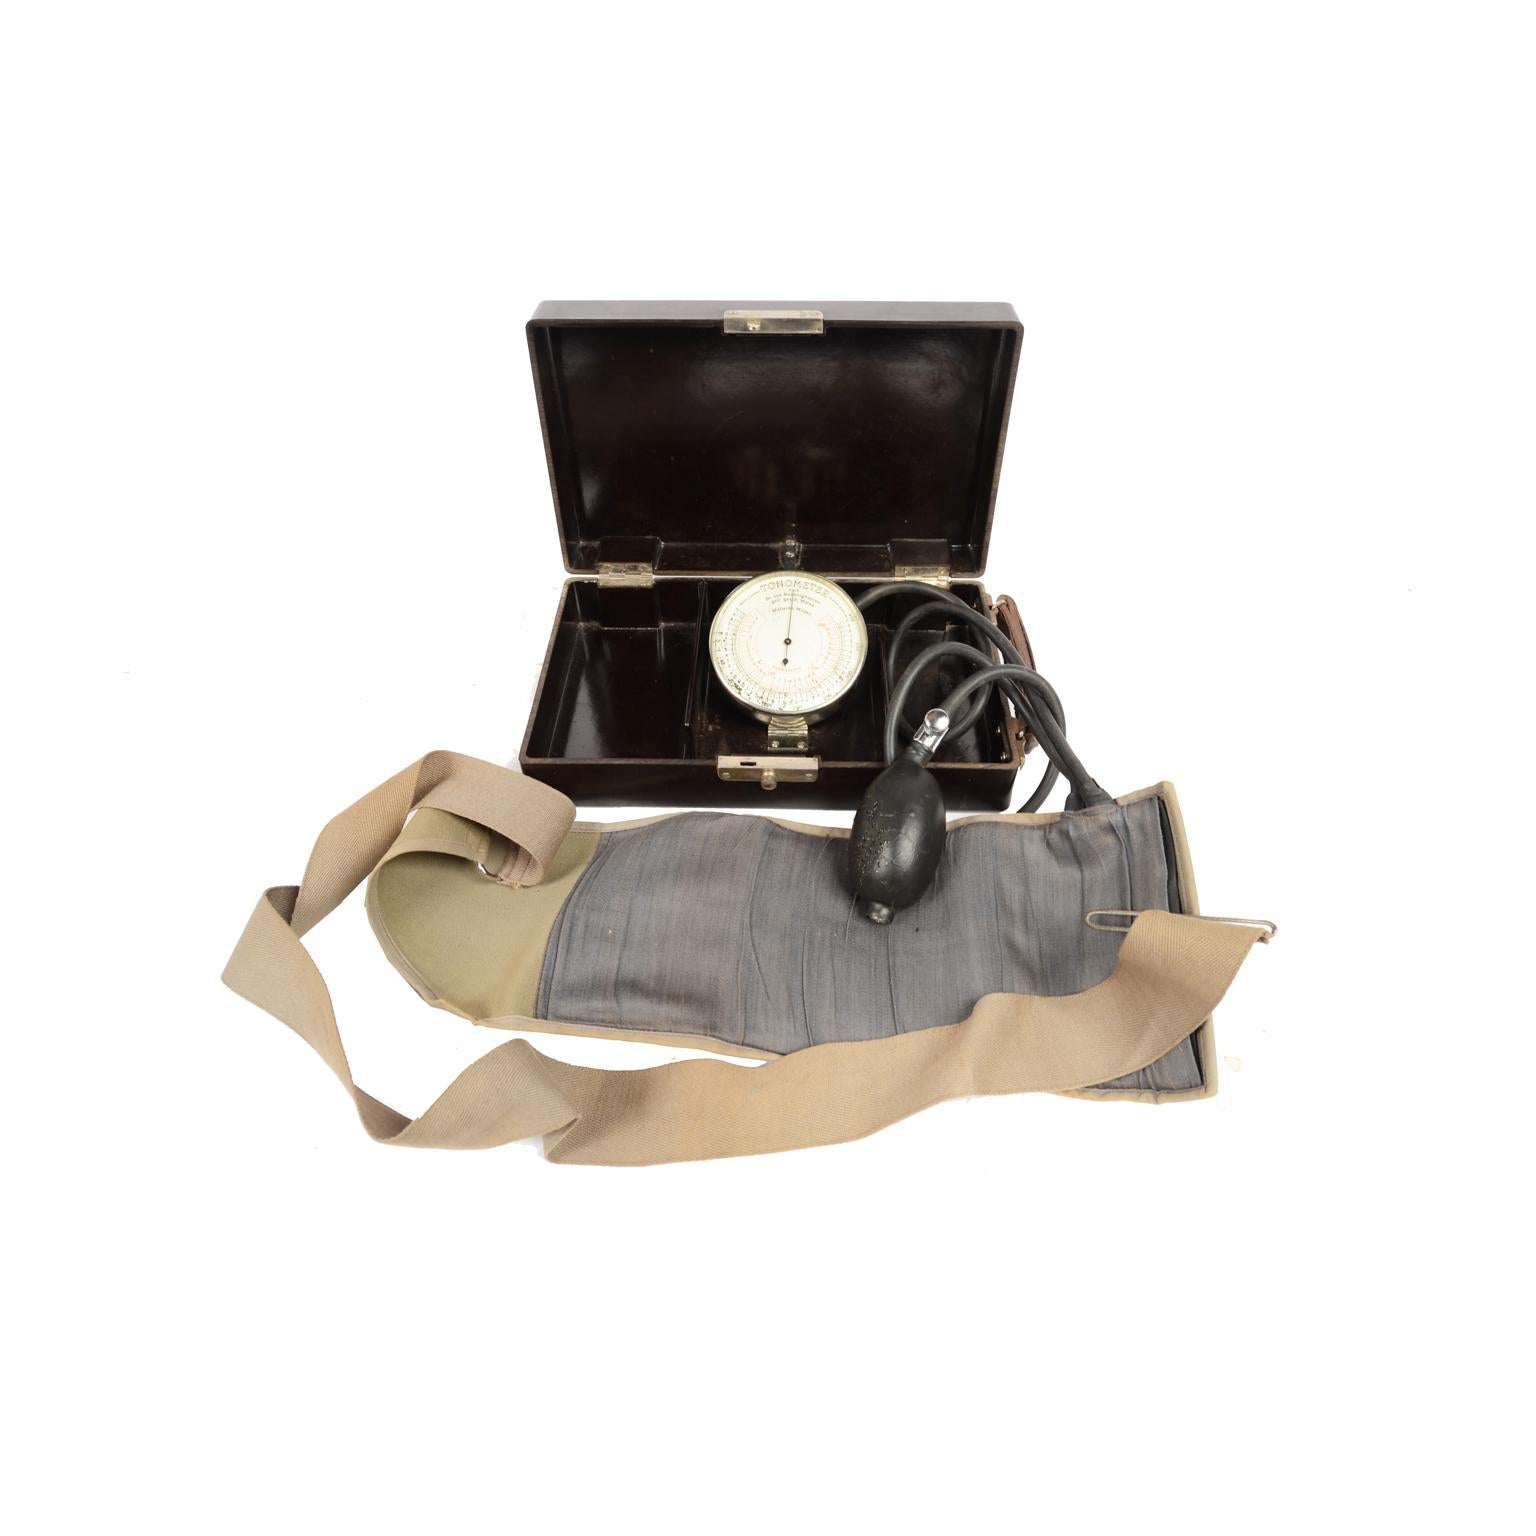 Mid-20th Century Vintage Medical Sphygmomanometer in its Original Bakelite Box, German 1930s